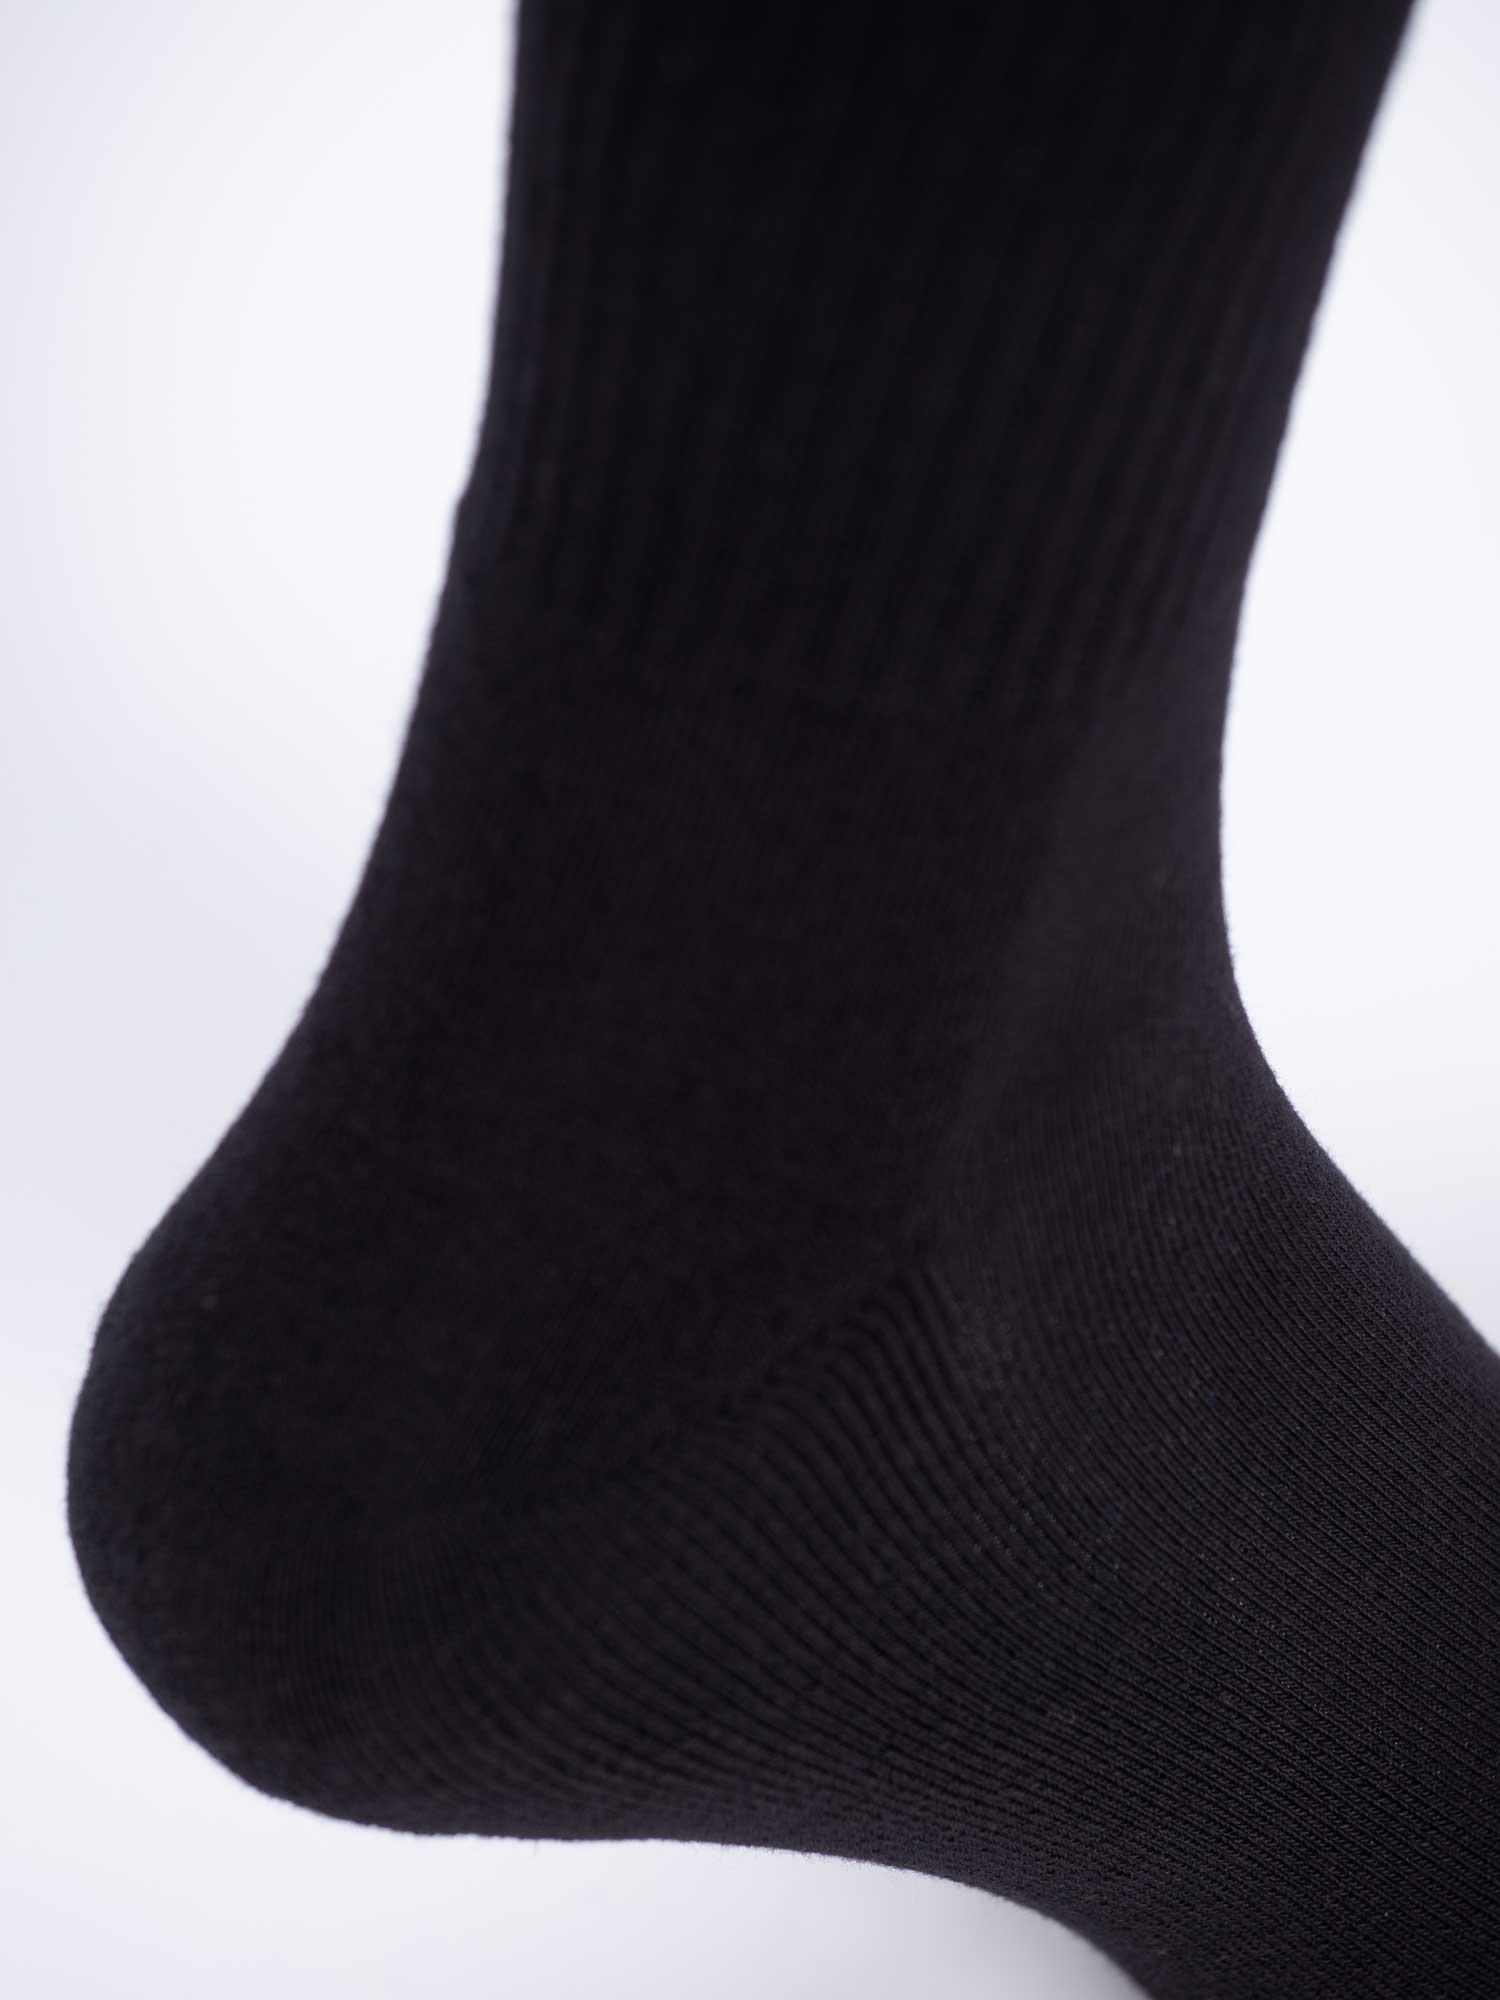 Selected image for BRILLE Čarape Fresh x1 Socks crne